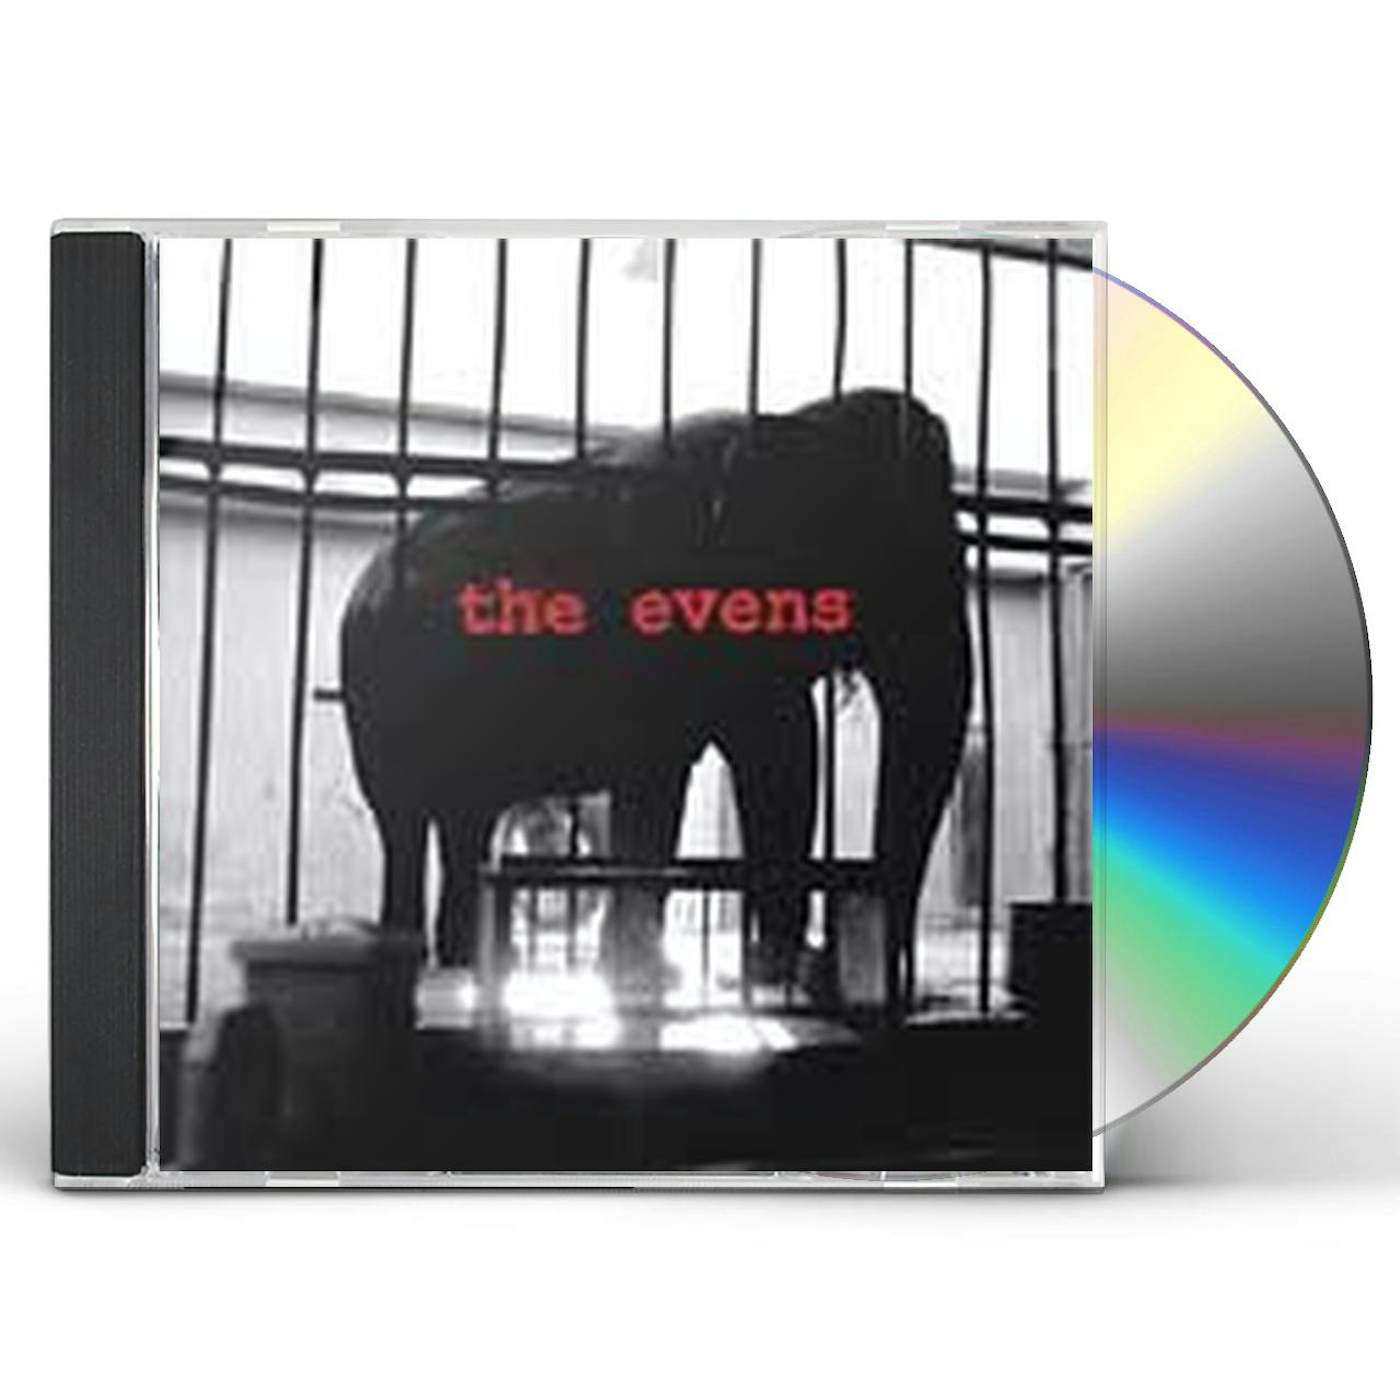 The Evens CD